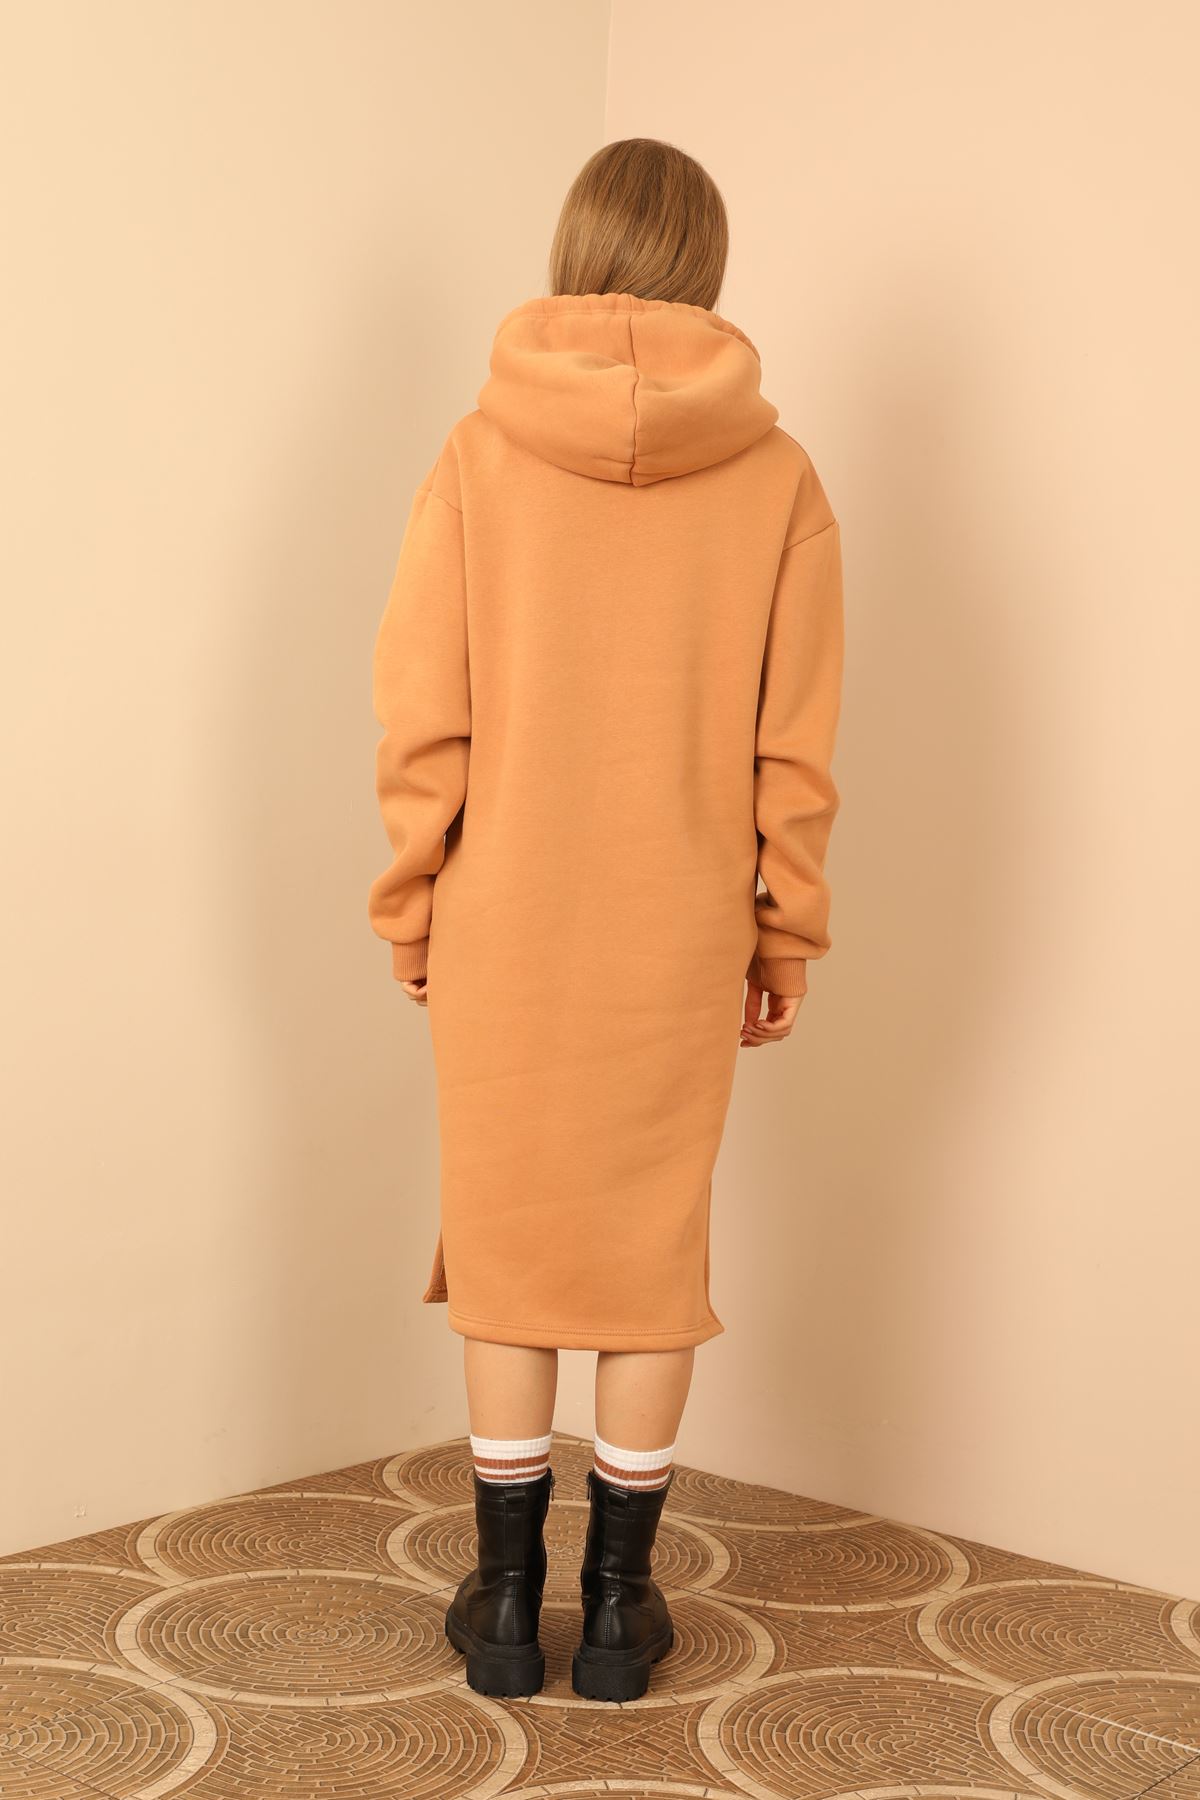 Third Knit With Wool İnside Fabric Long Sleeve Hooded Oversize Women Dress - Light Brown